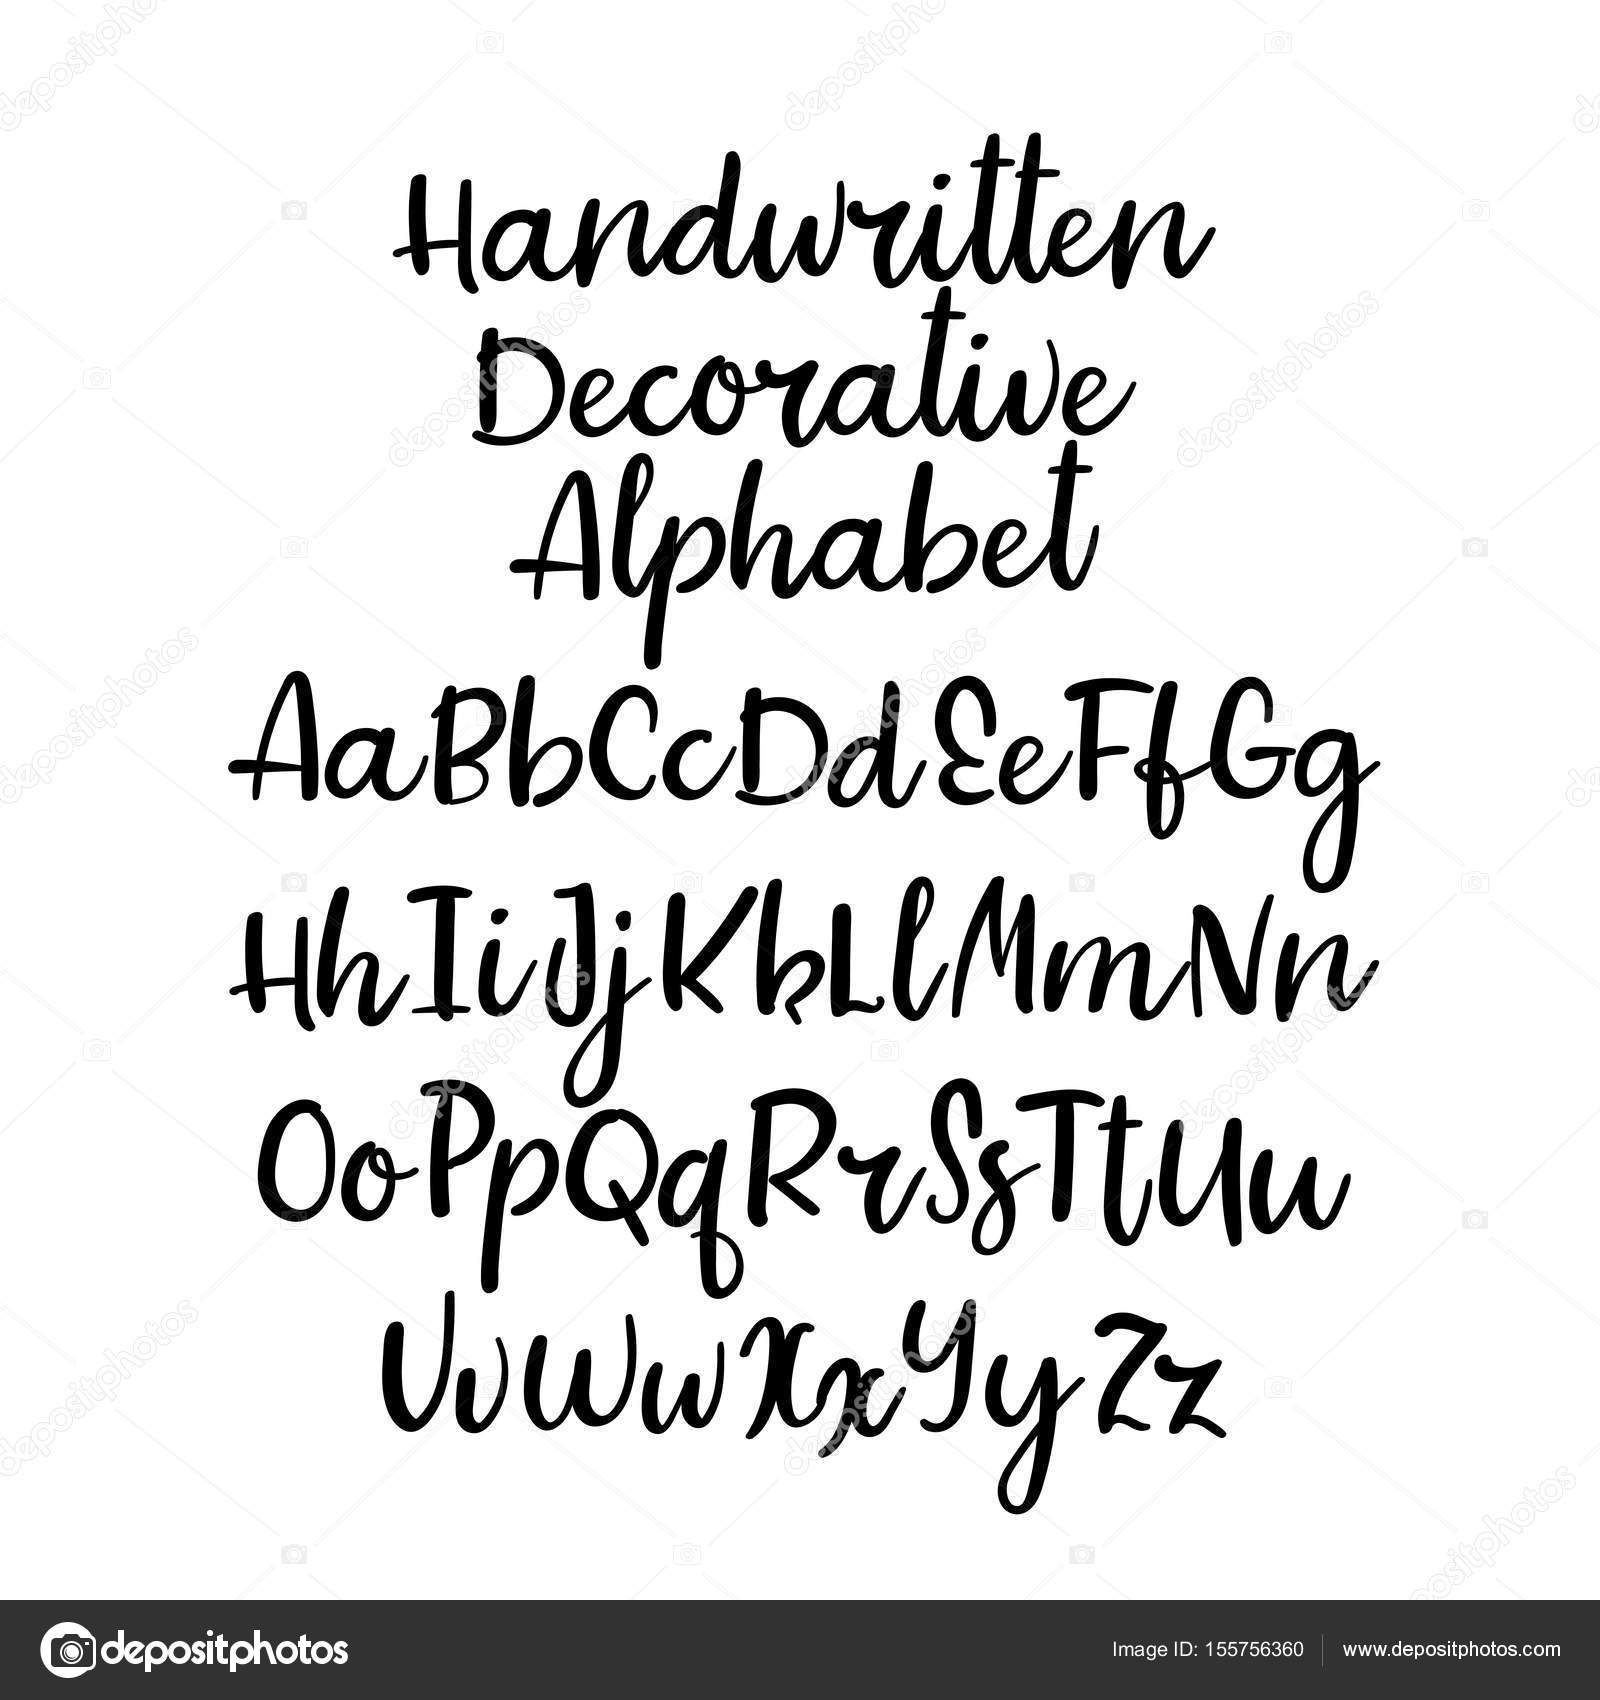 Decorative And Artistic Handwriting Decorative Hand Drawn Alphabet